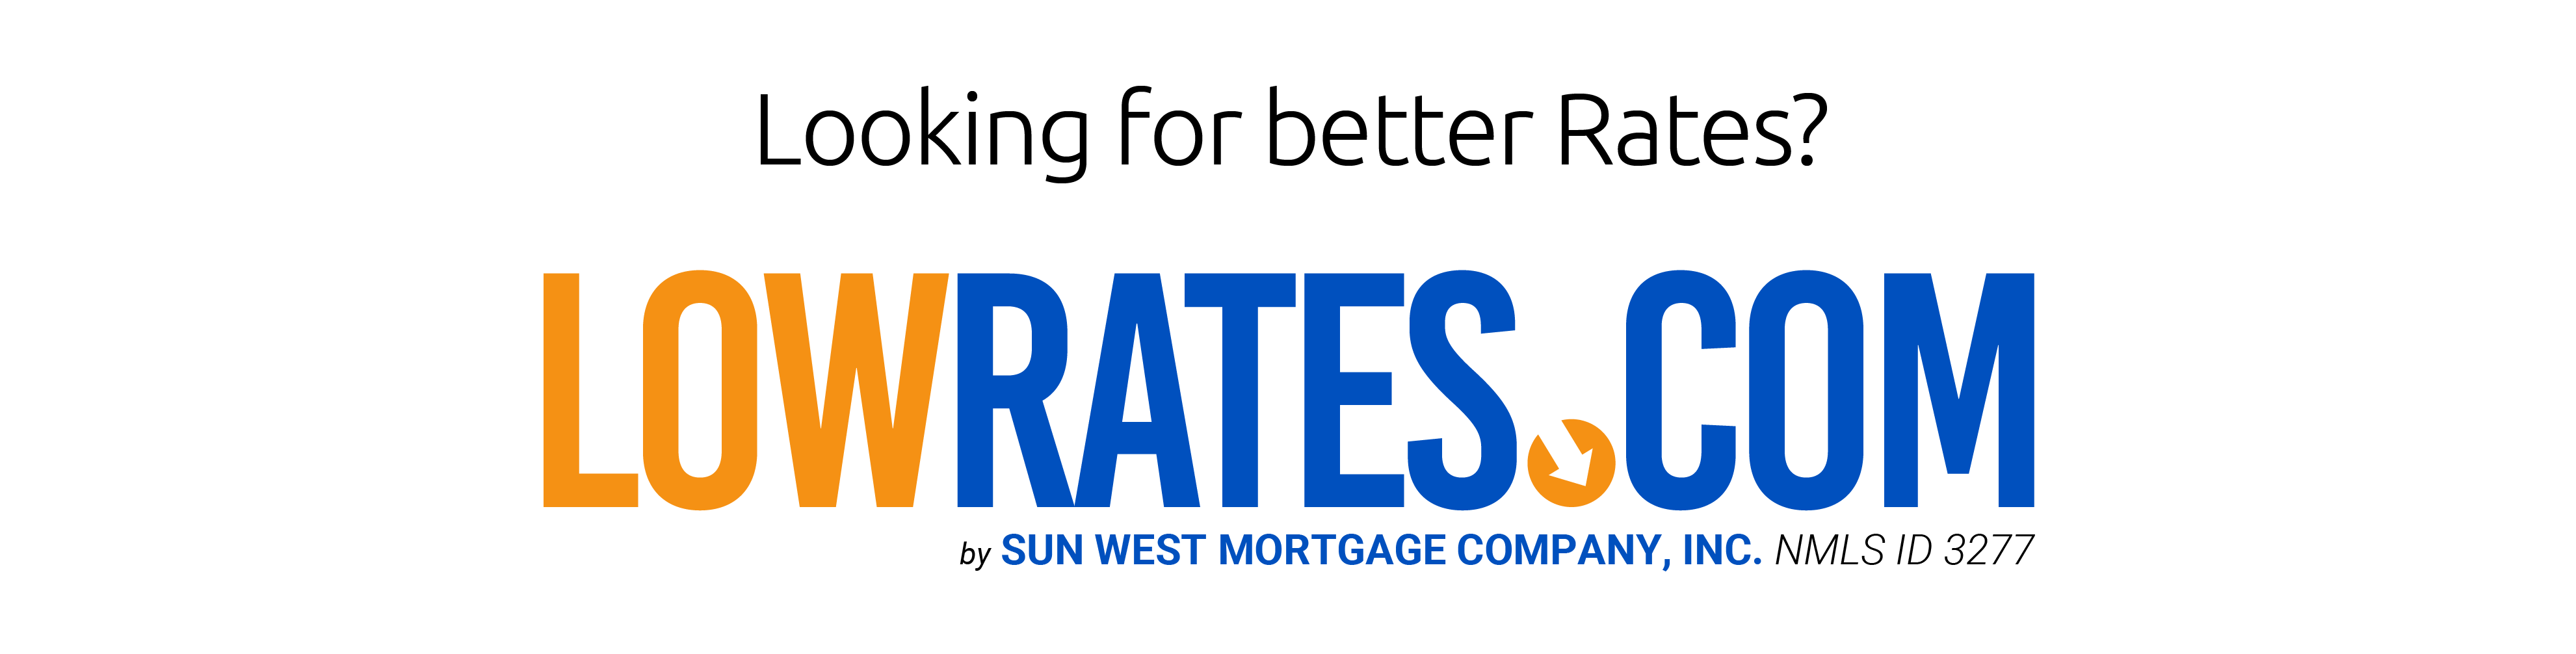 Sun West Mortgage Company Inc Housing America Since 1980